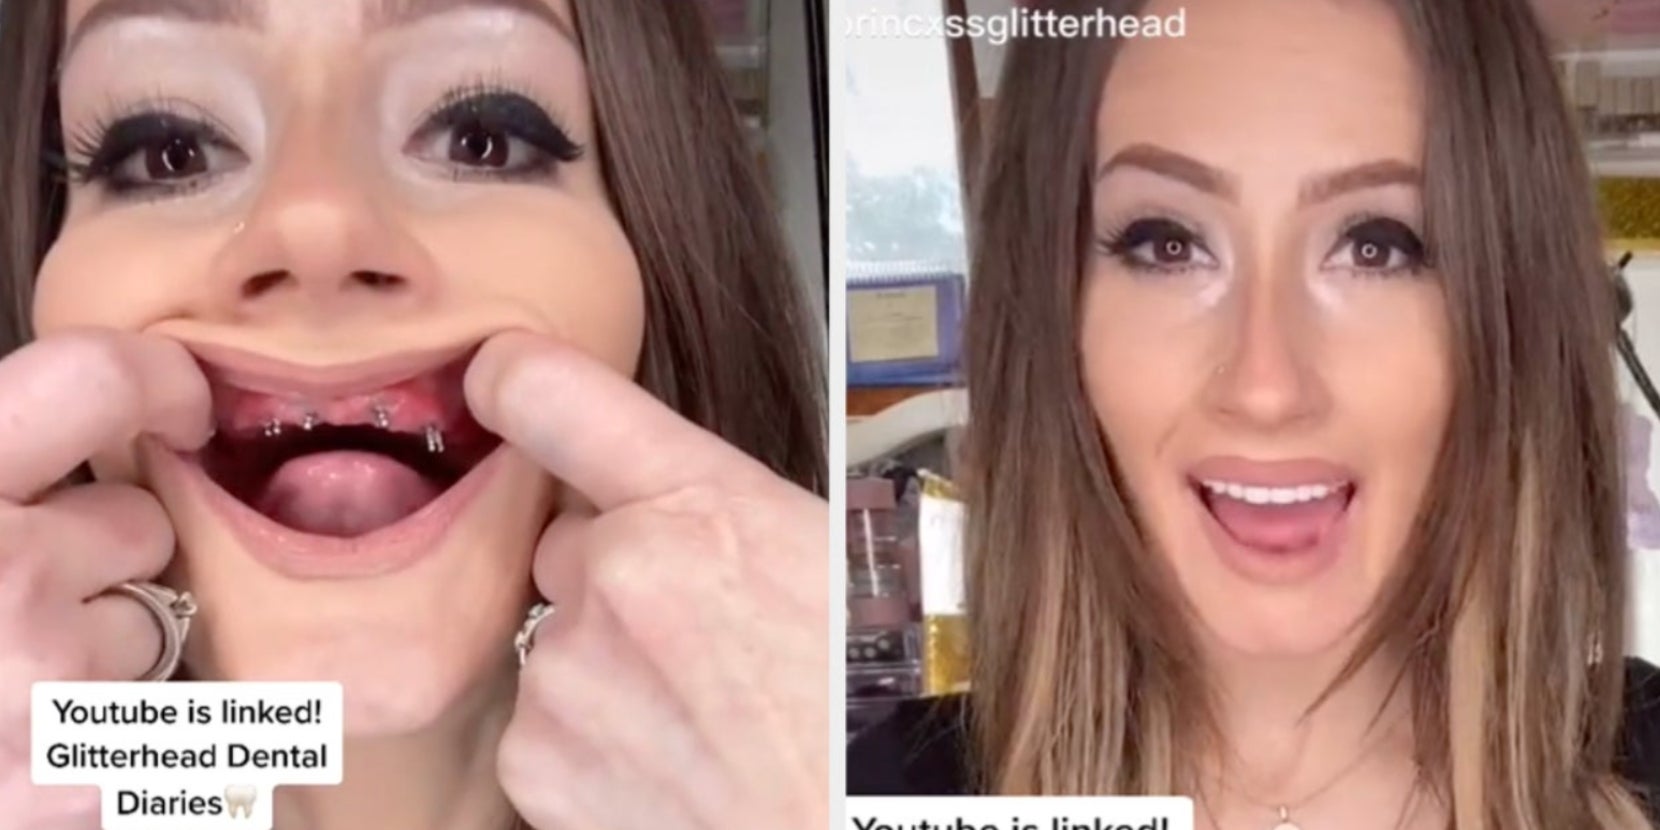 TikTok Users Making Risky DIY Dentures, Teeth Out of InstaMorph Beads